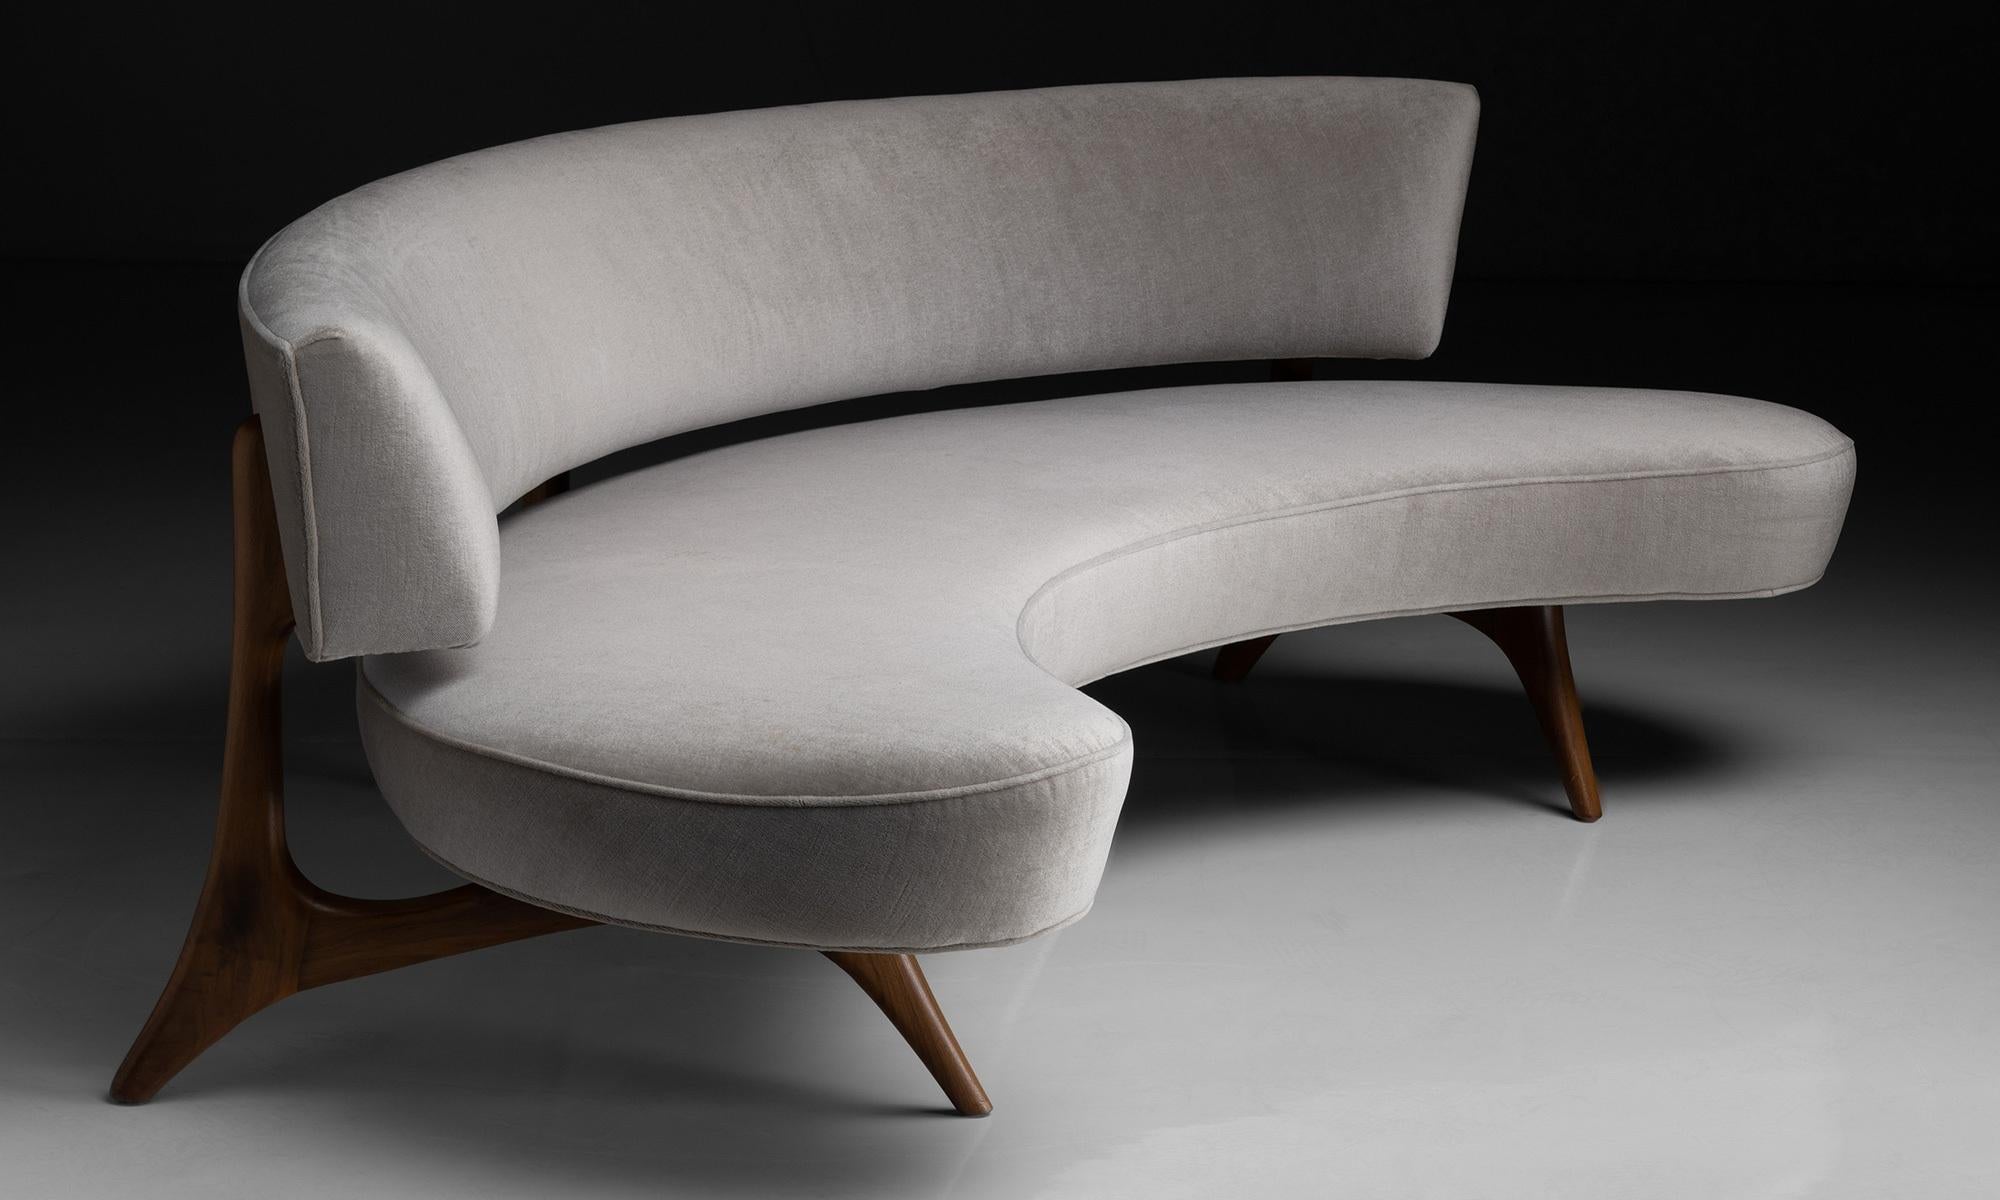 Floating curved sofa by Vladimir Kagan

America, 2018

Model - 176SC sofa, originally designed in 1952.

Measures : 82.75” L x 37”D x 30”H x 16.5”seat
 
 
 